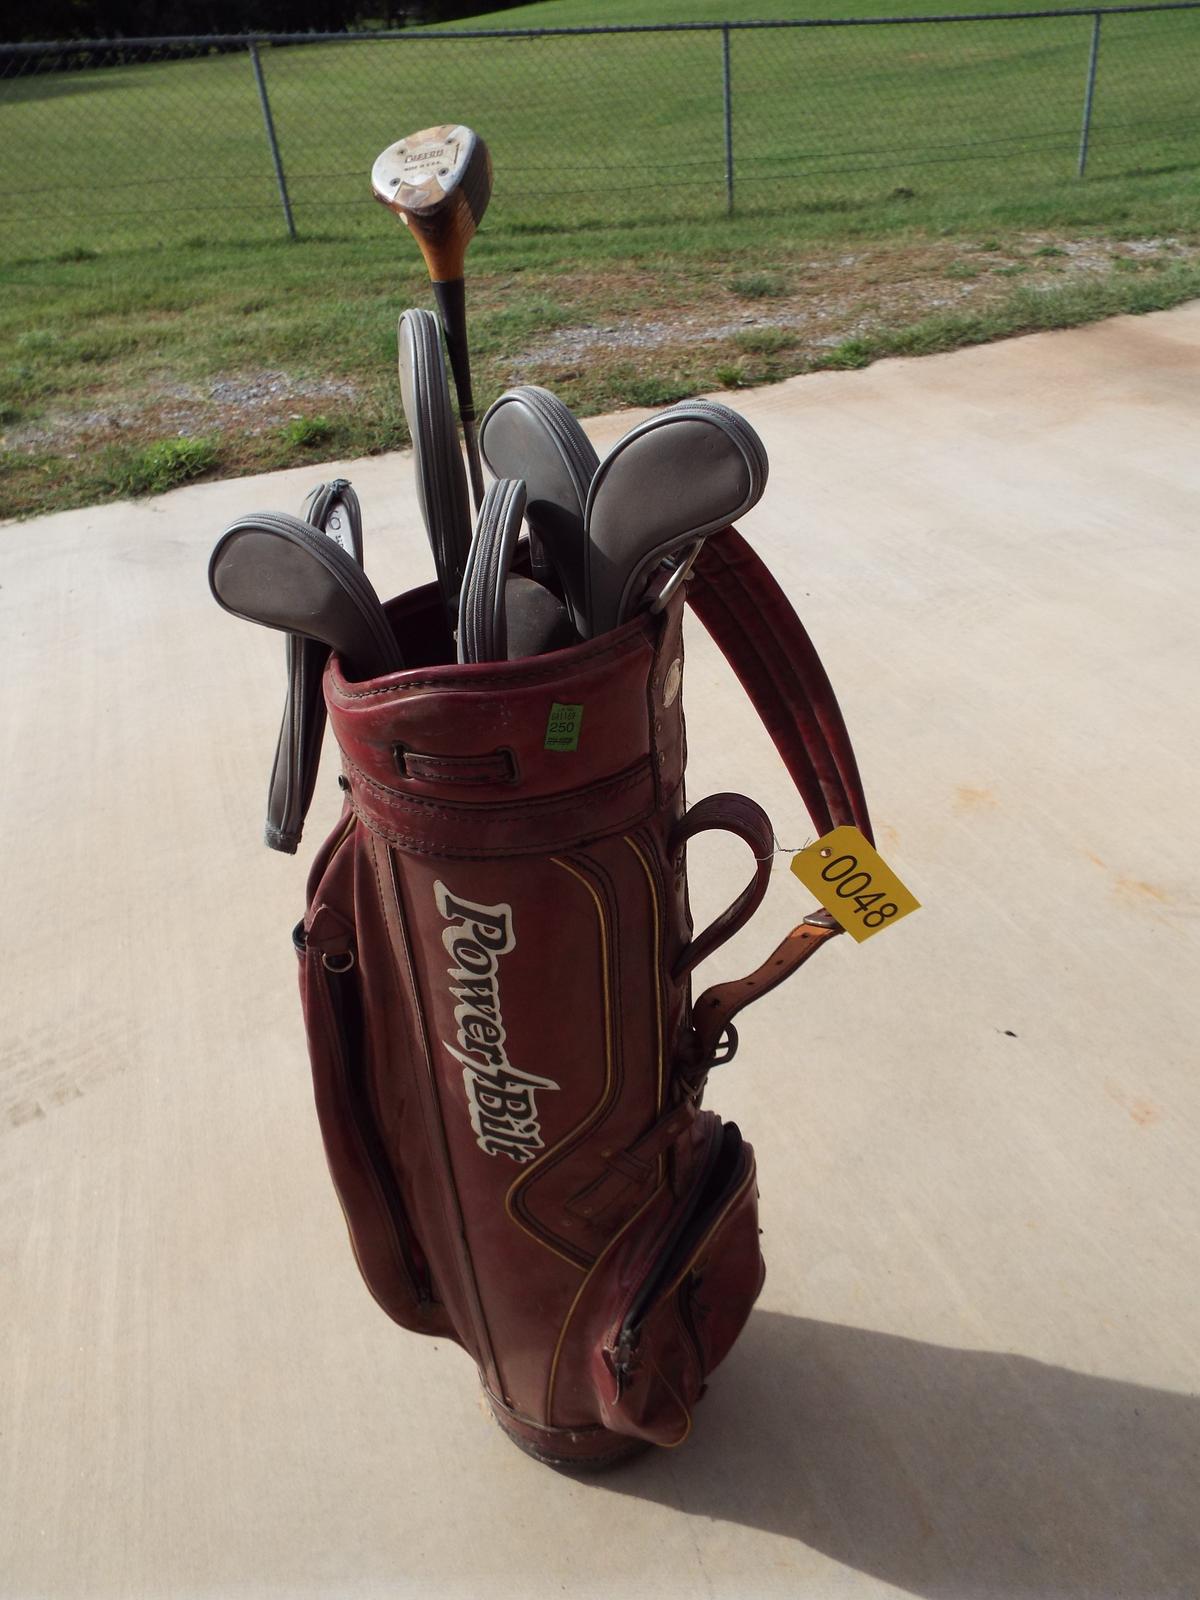 Powerbilt golf bag,